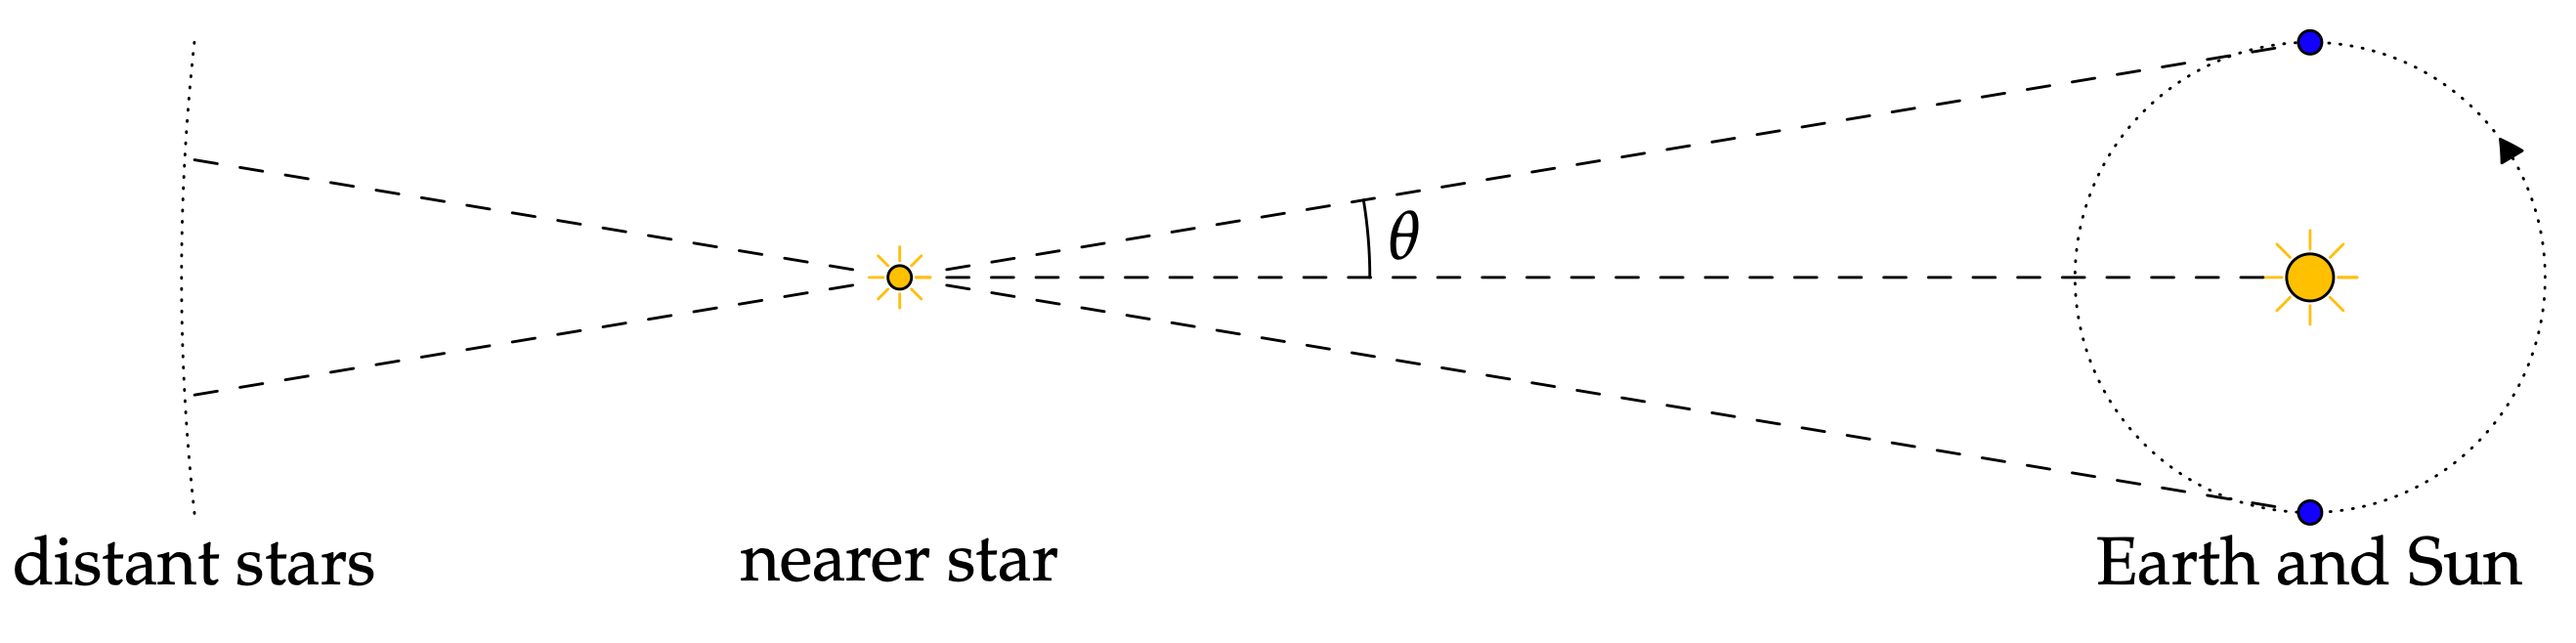 Astronomi exempel - bild av www.math.uci.edu